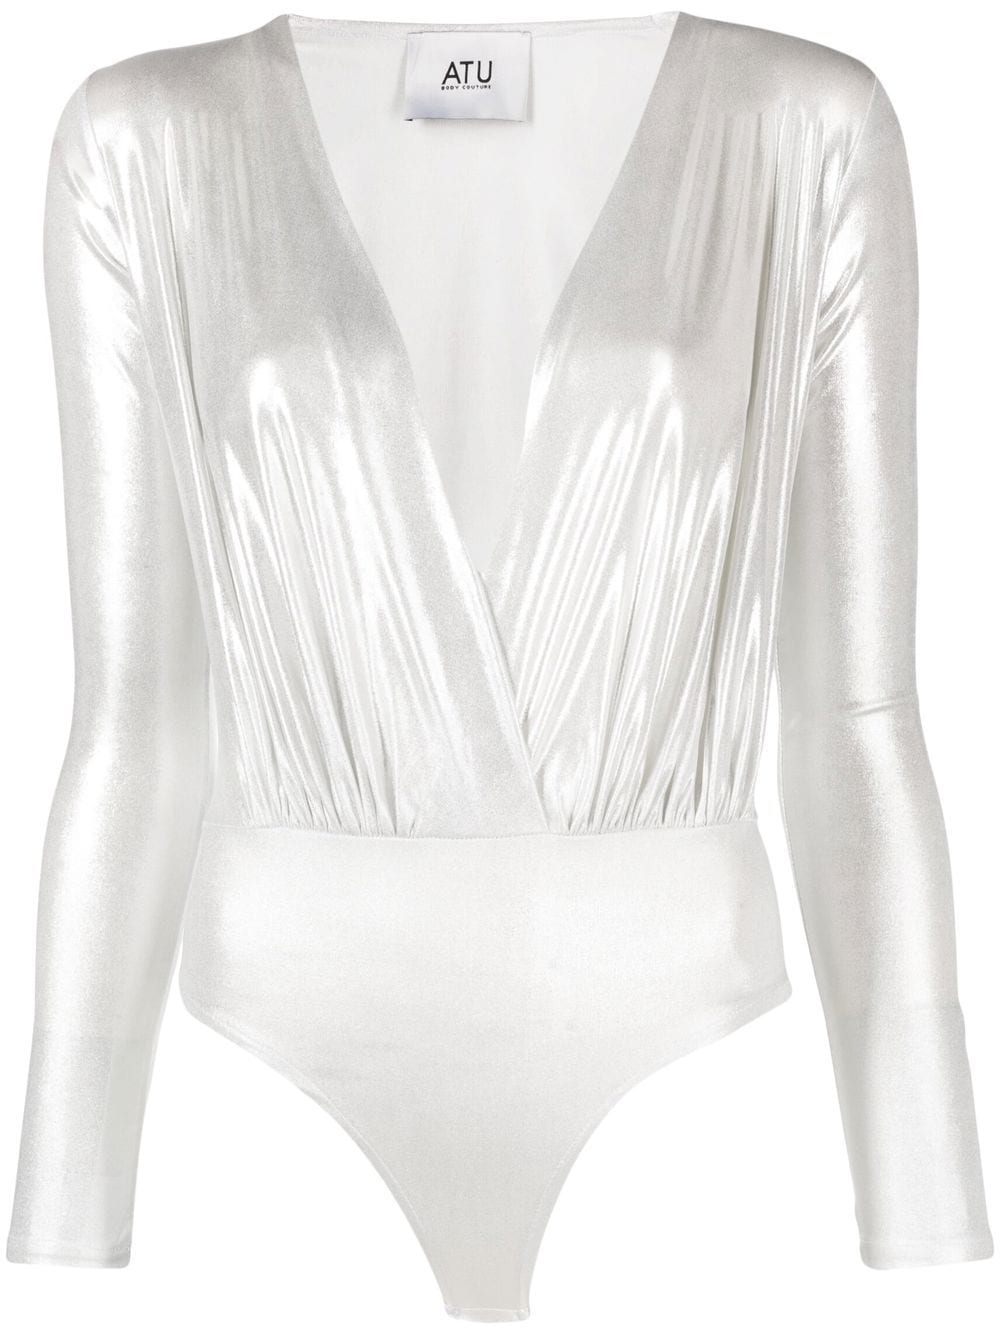 Atu Body Couture metallic V-neck bodysuit - Silver von Atu Body Couture